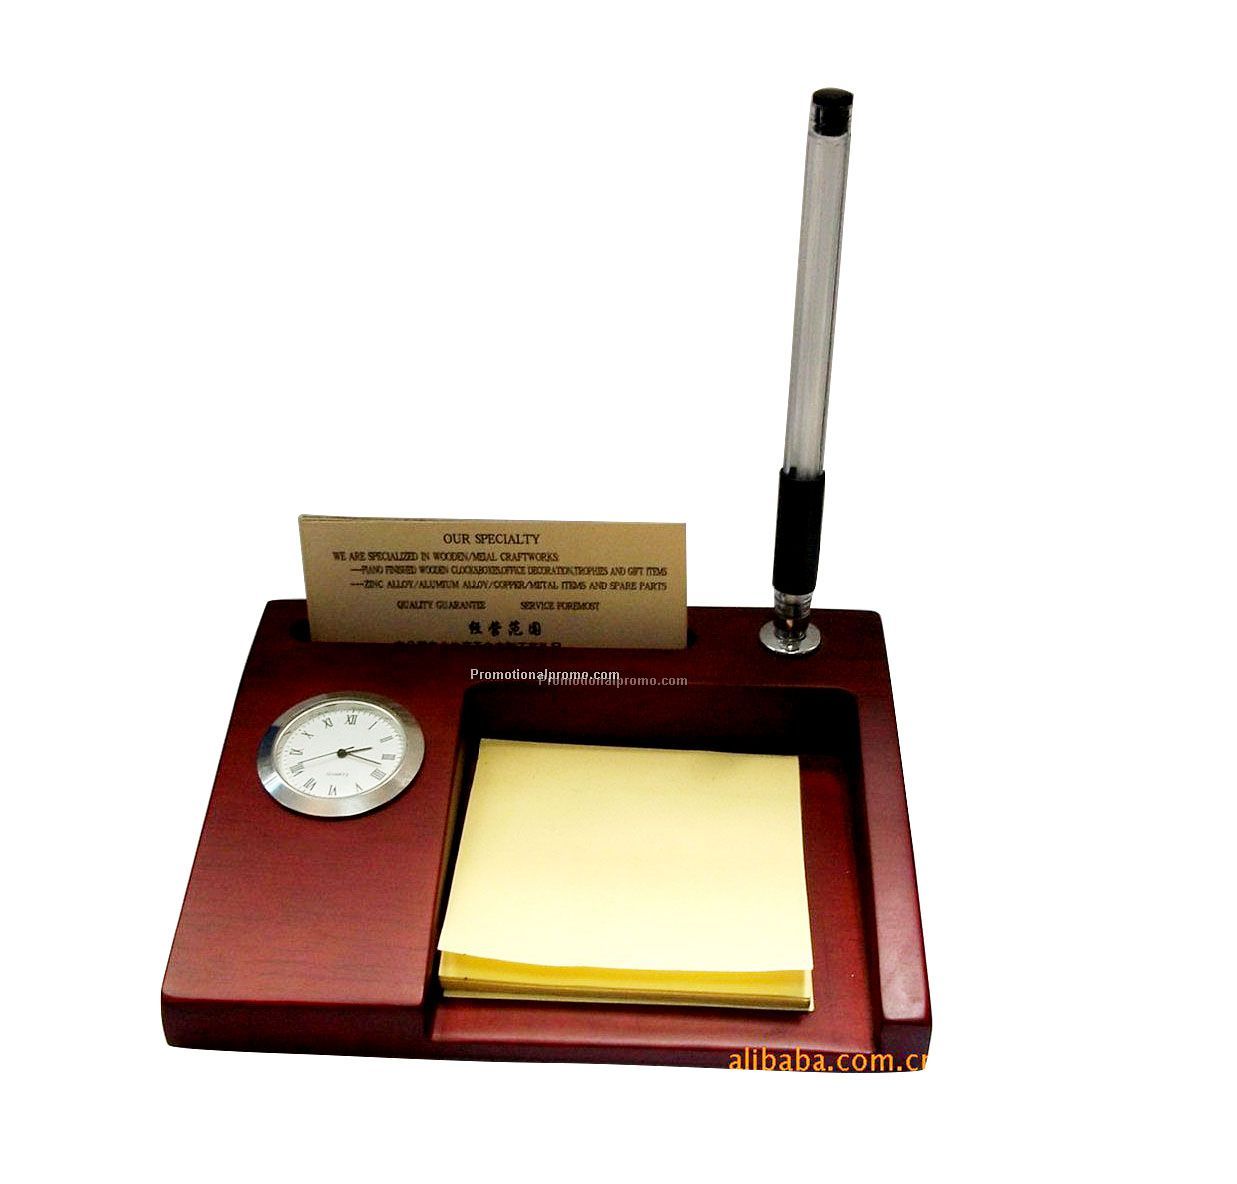 Promotional muti-function wood desktop clock